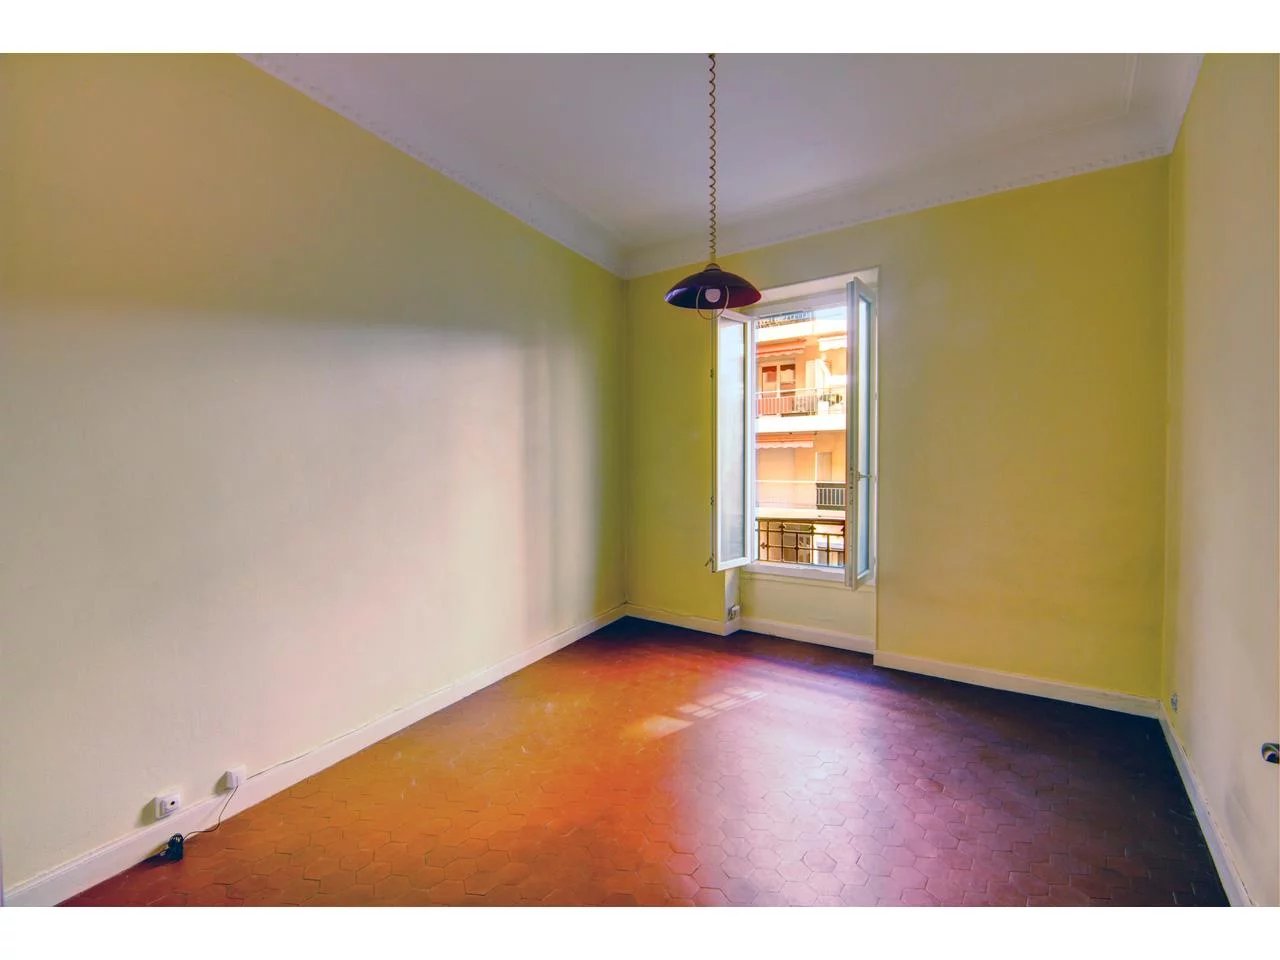 Appartement  2 Locali 48.77m2  In vendita   129 000 €